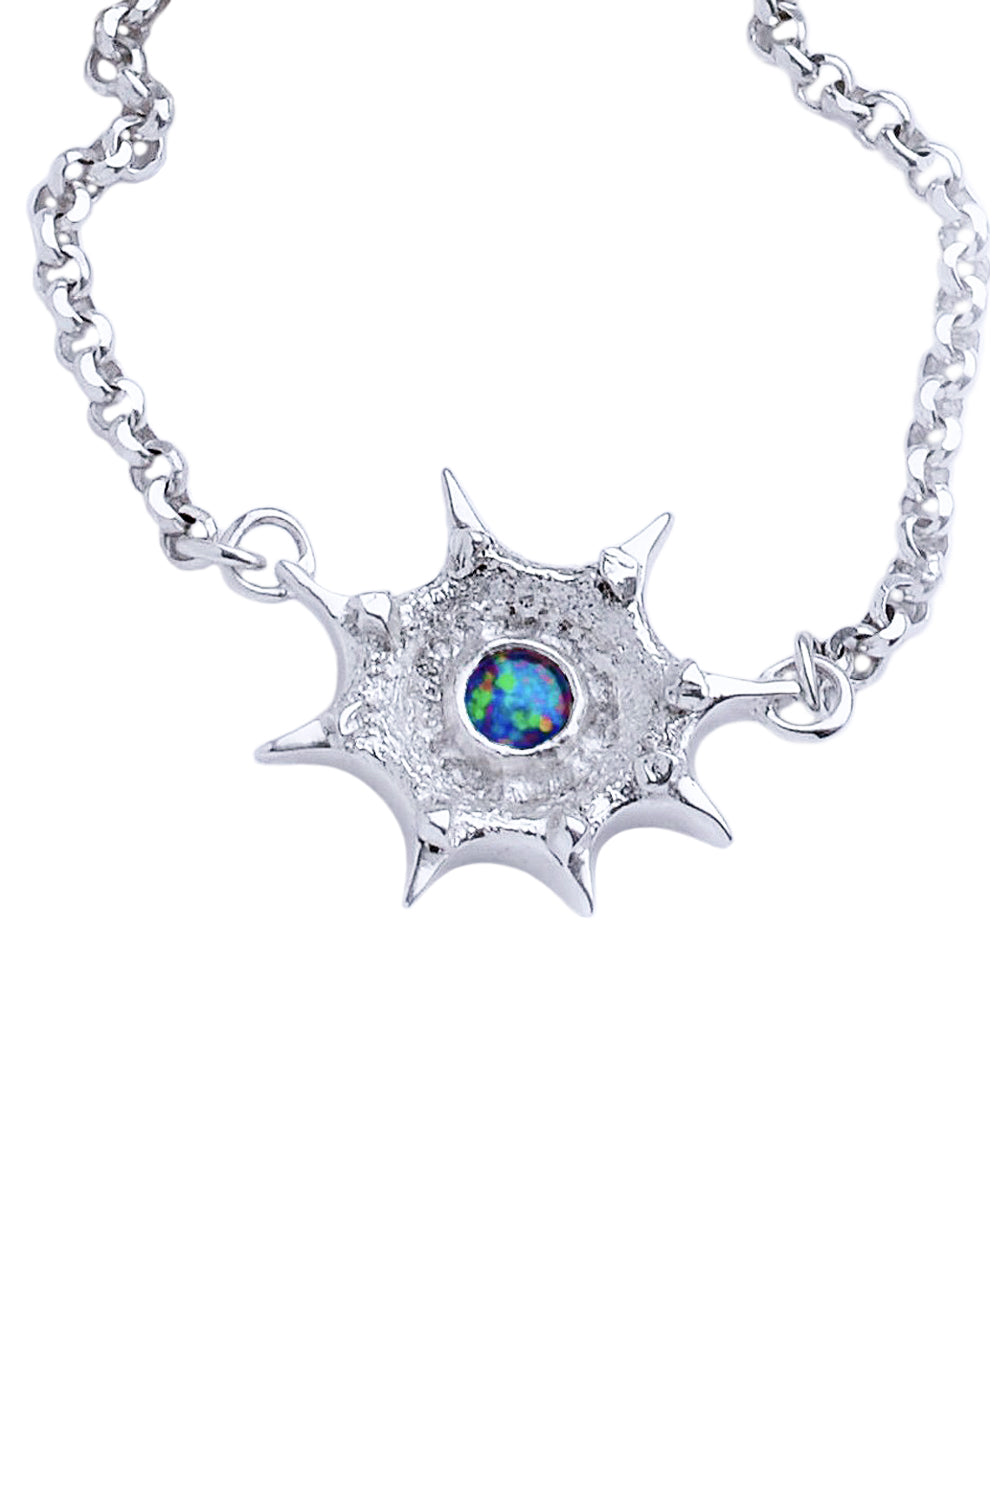 nebula necklace in silver with opal by Annika Burman